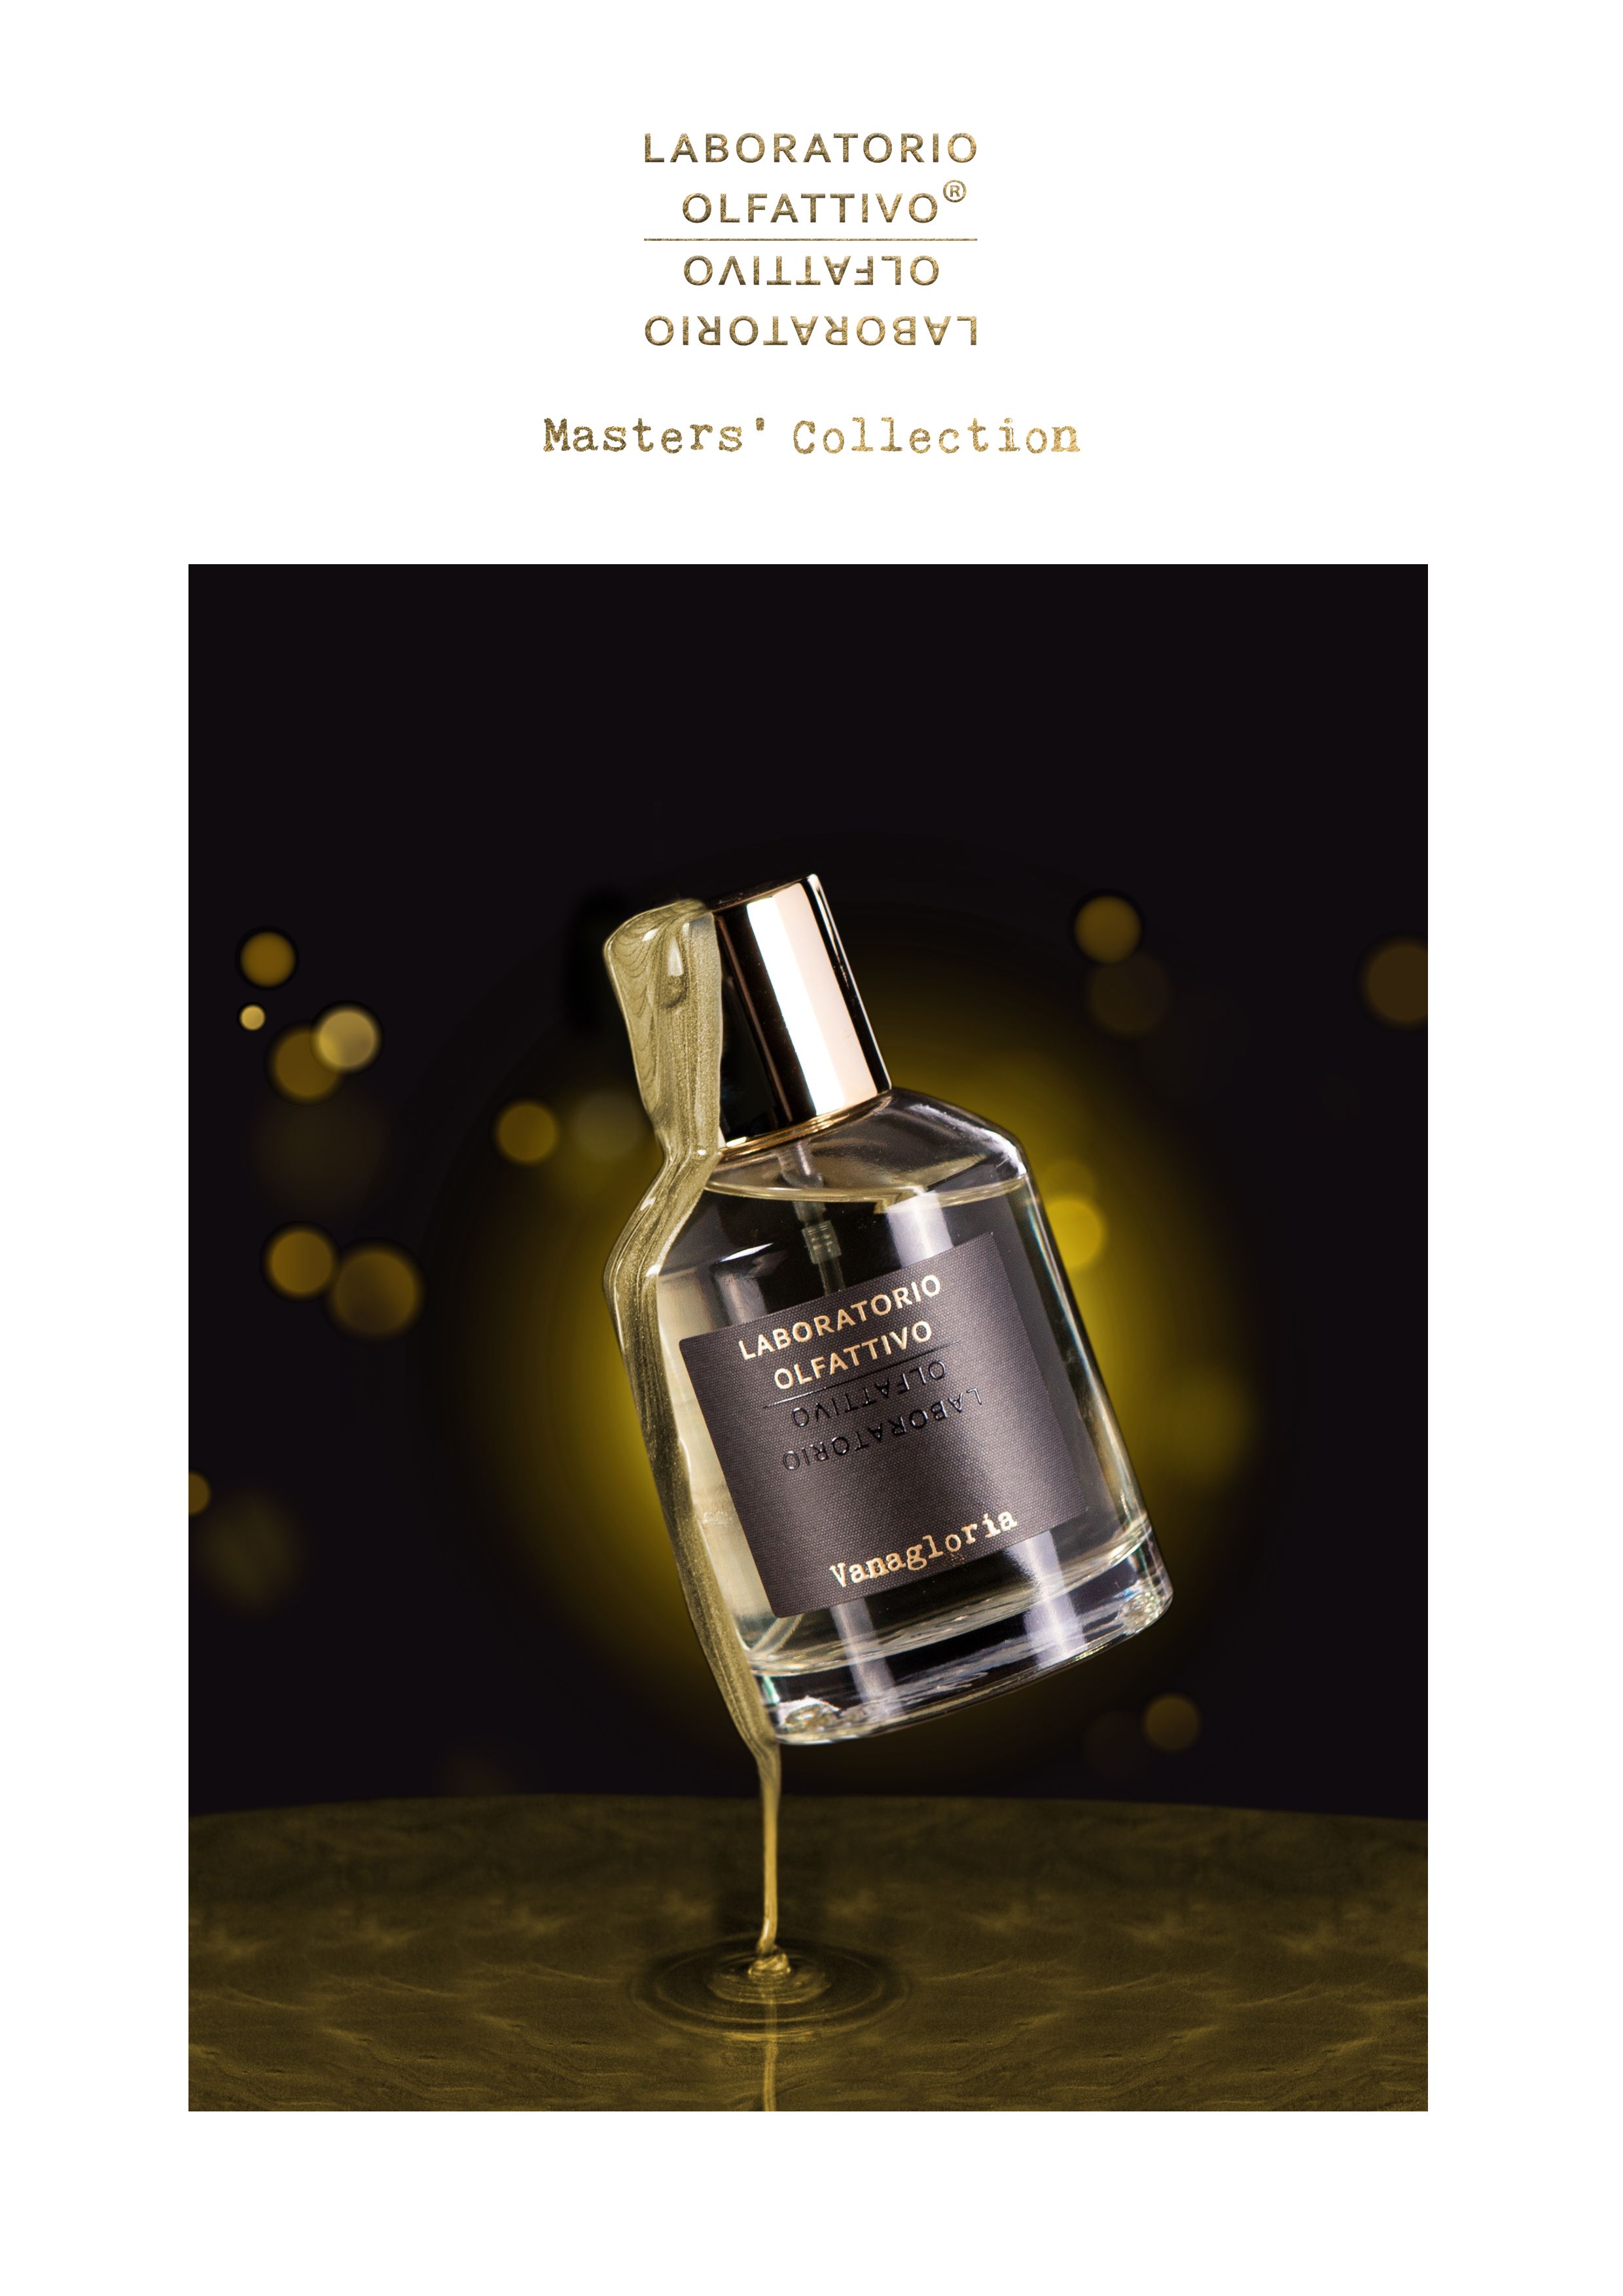 Vanagloria Laboratorio Olfattivo perfume - a new fragrance for women ...